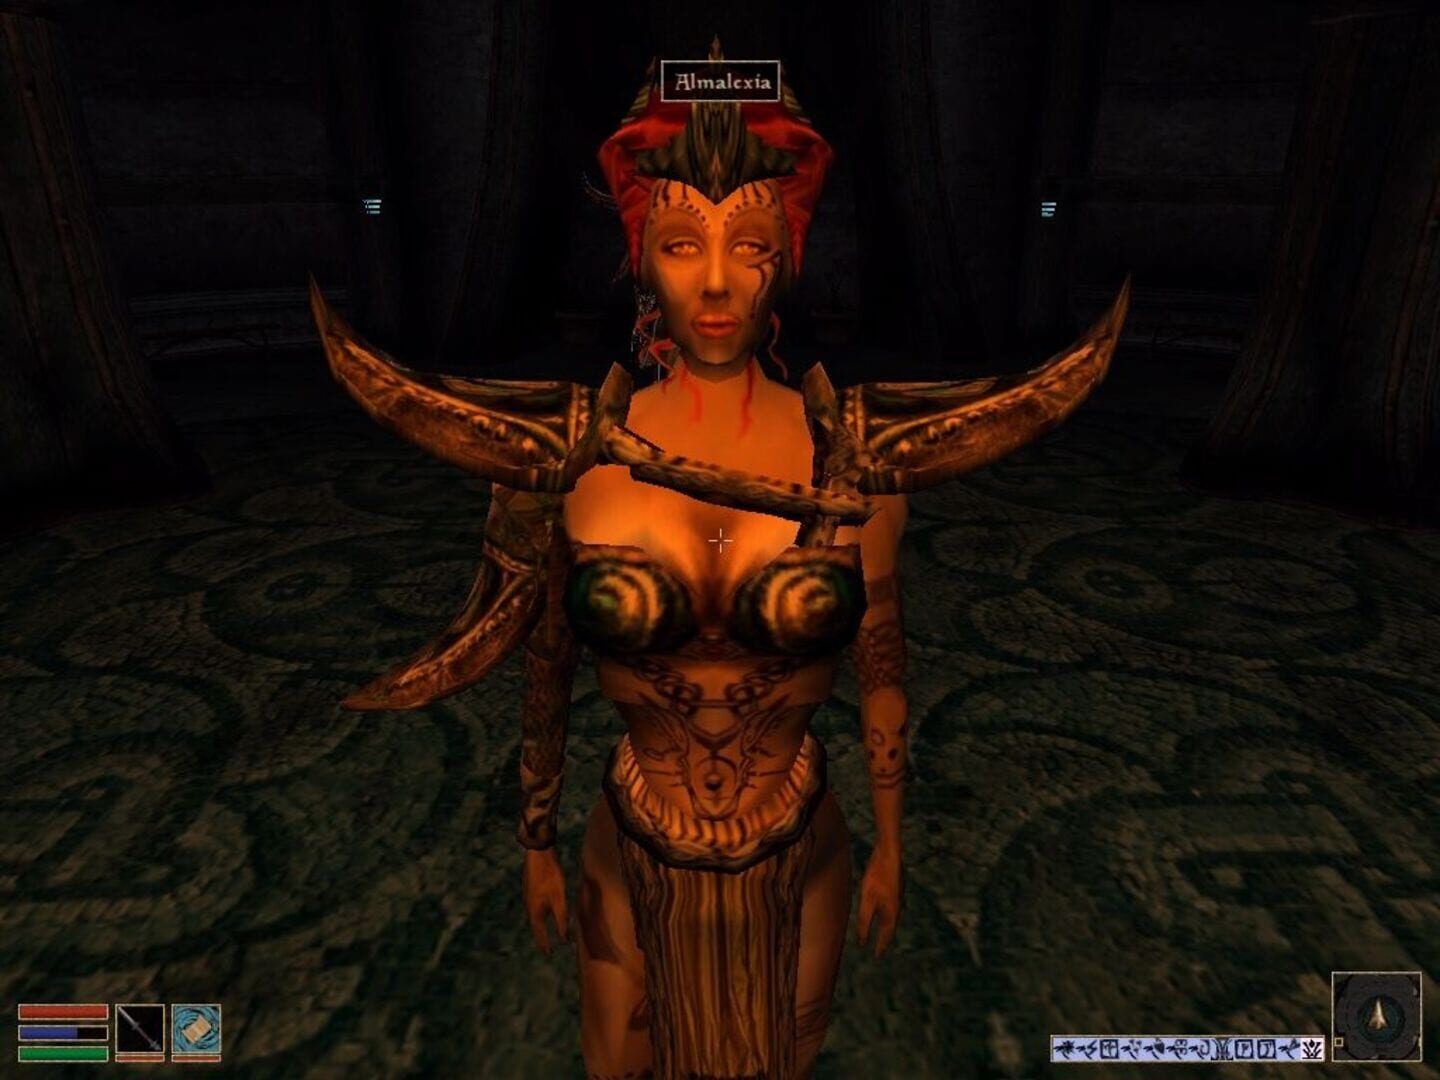 Captura de pantalla - The Elder Scrolls III: Tribunal